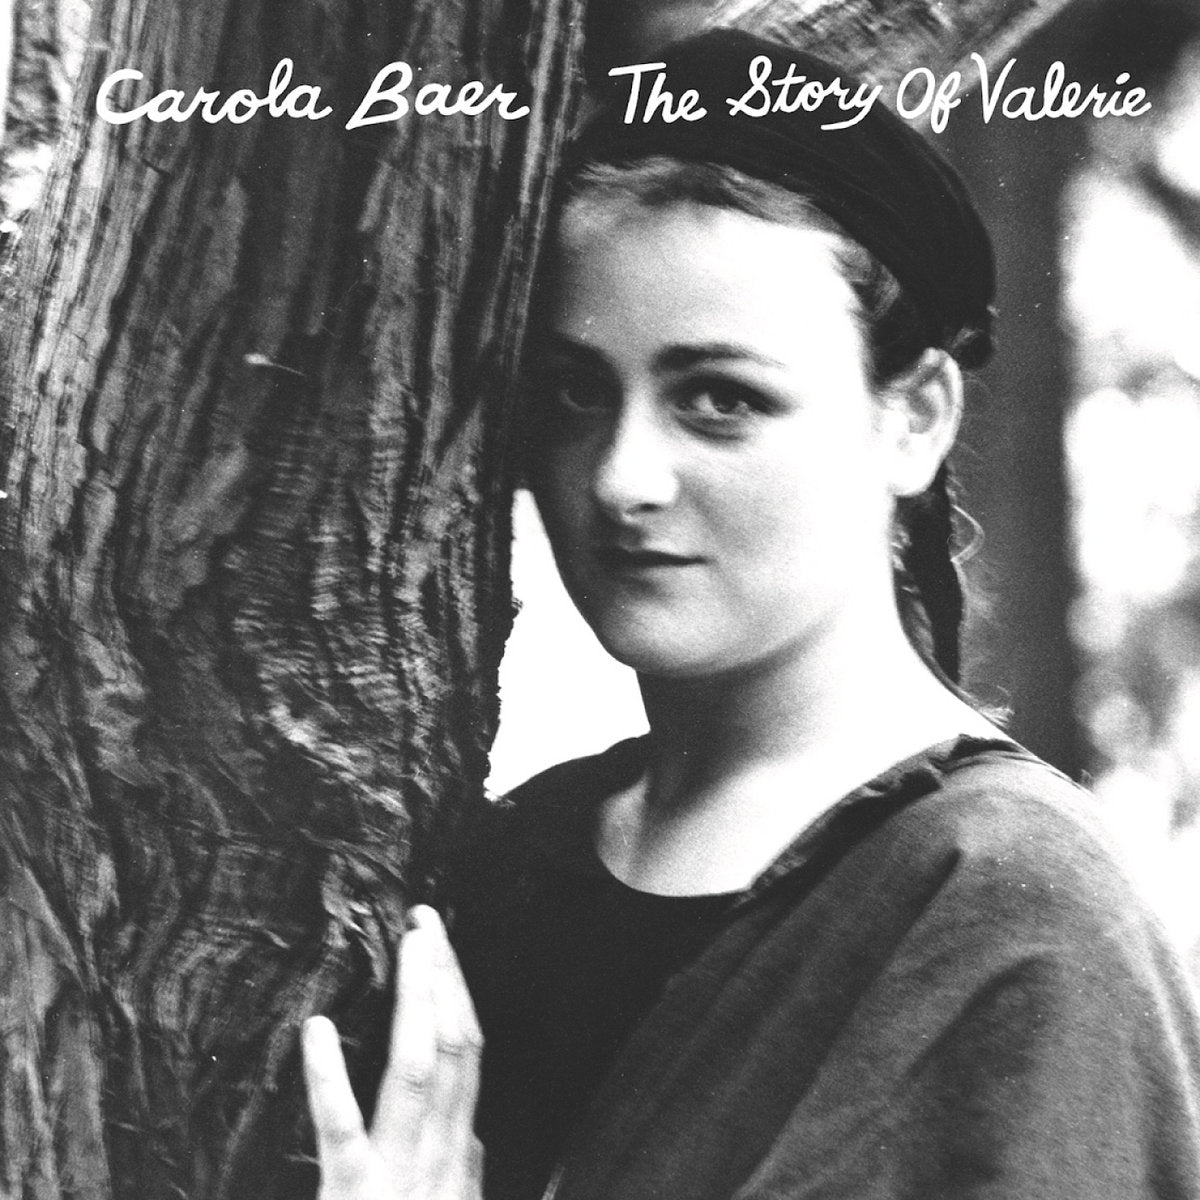 Arcade Sound - Carola Baer - The Story of Valerie - LP image